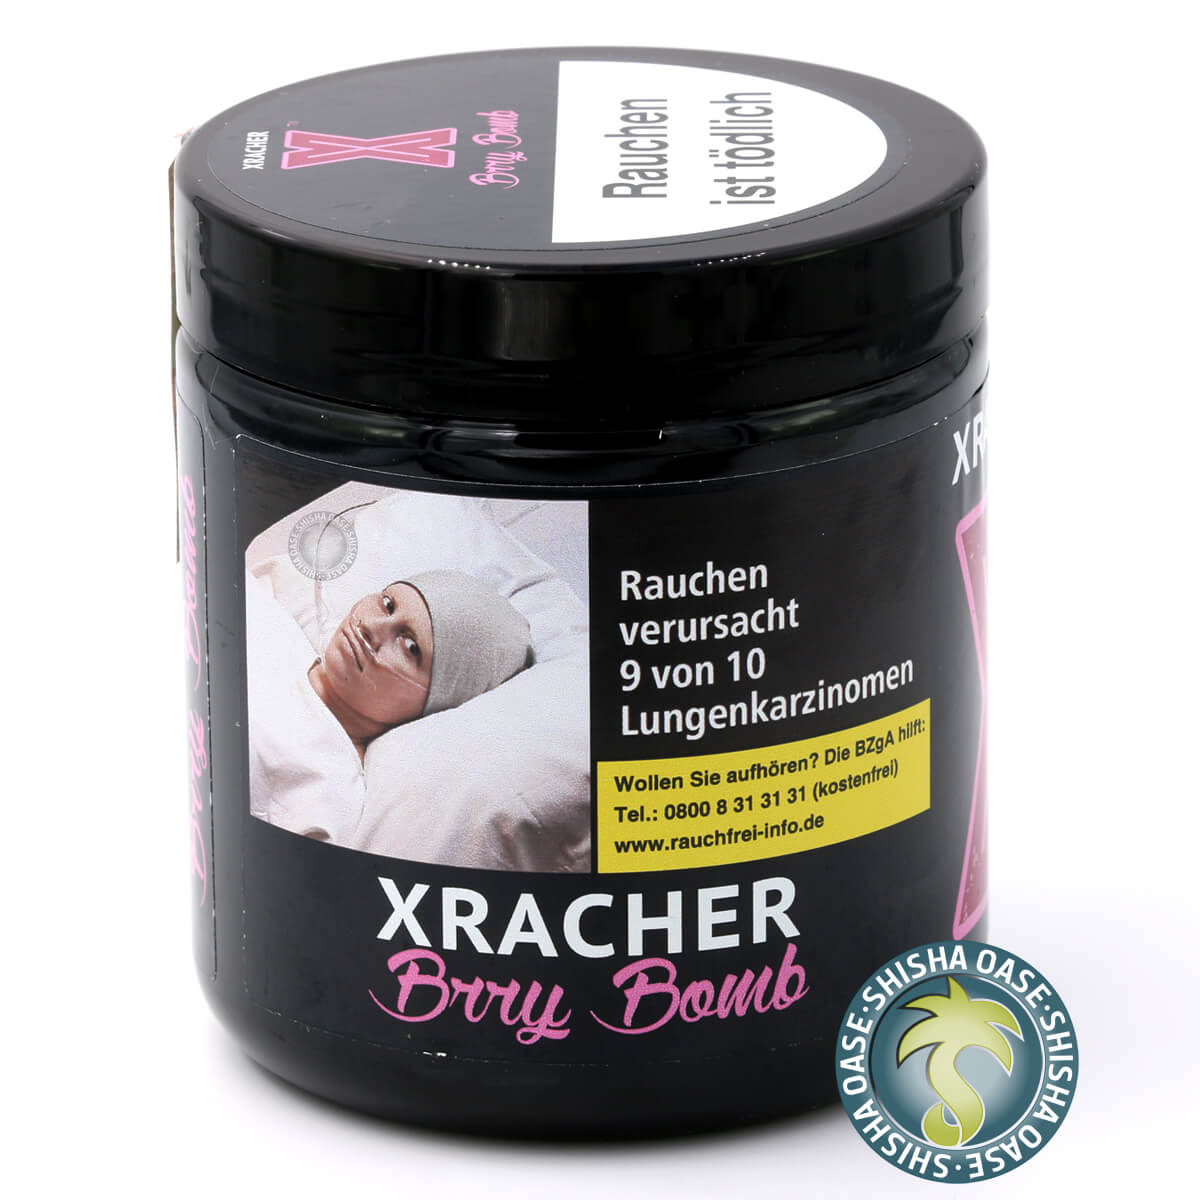 XRacher Tobacco - Brry Bomb 200g